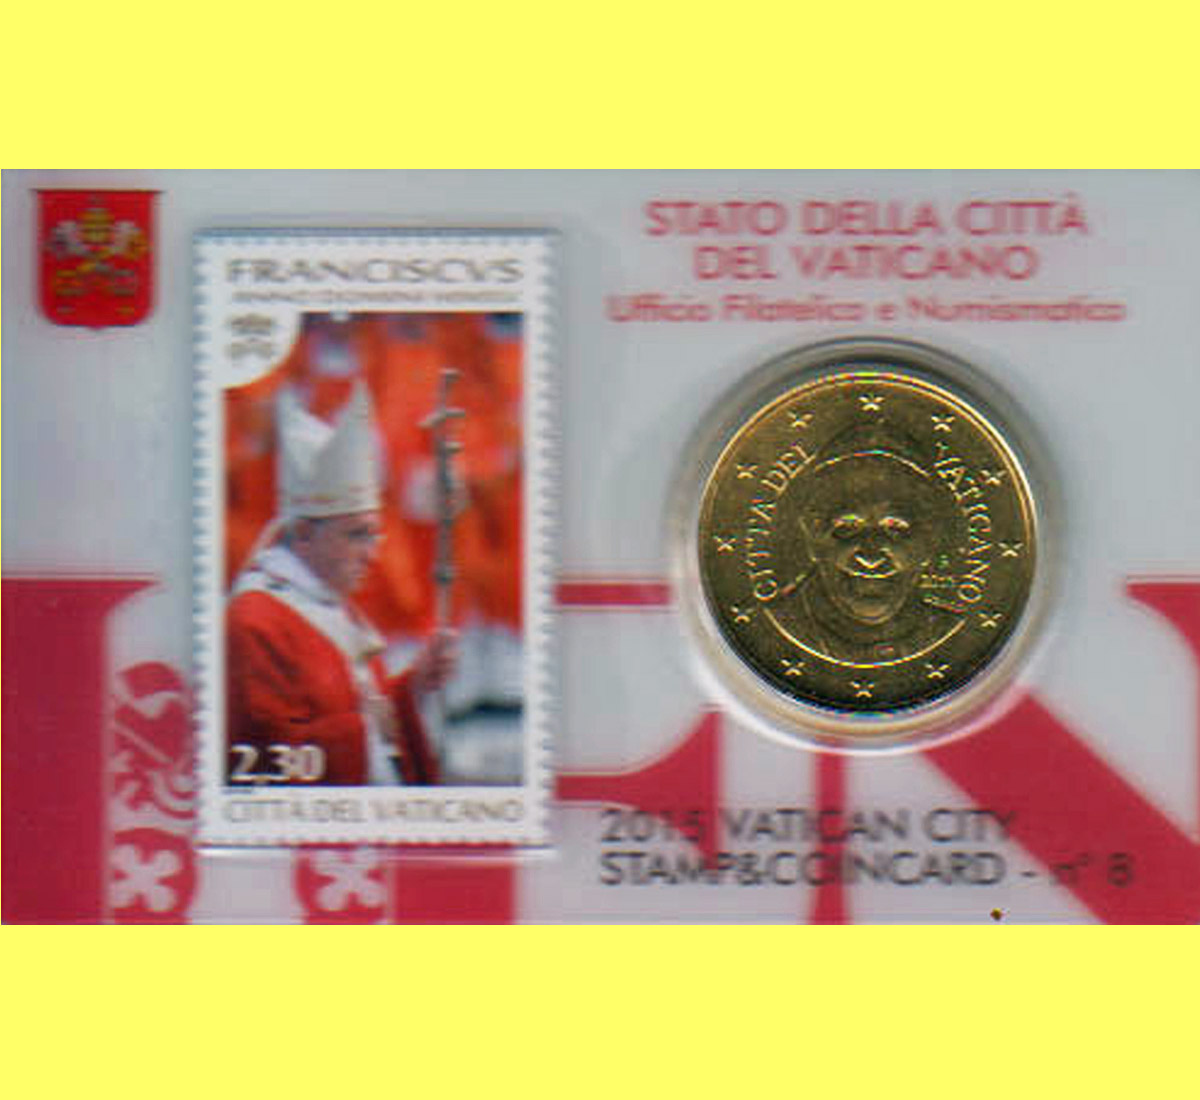  Offiz. 50 Cent Coincard mit Briefmarke 2,30€ Vatikan 2015 nur 17.500 Stück!   